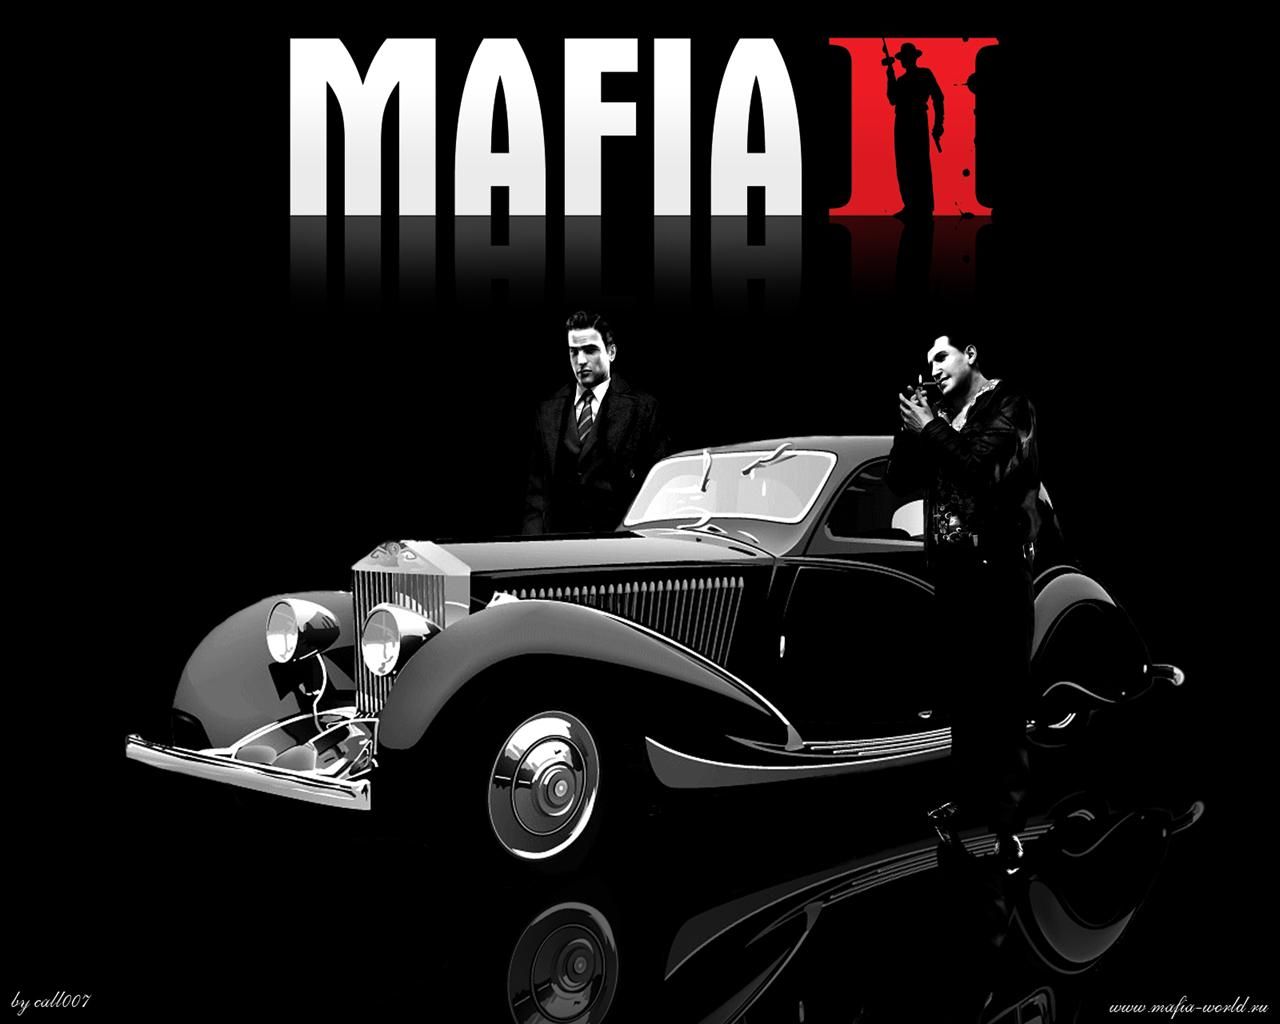 Best Mafia Wallpaper in High Quality, Mafia Background